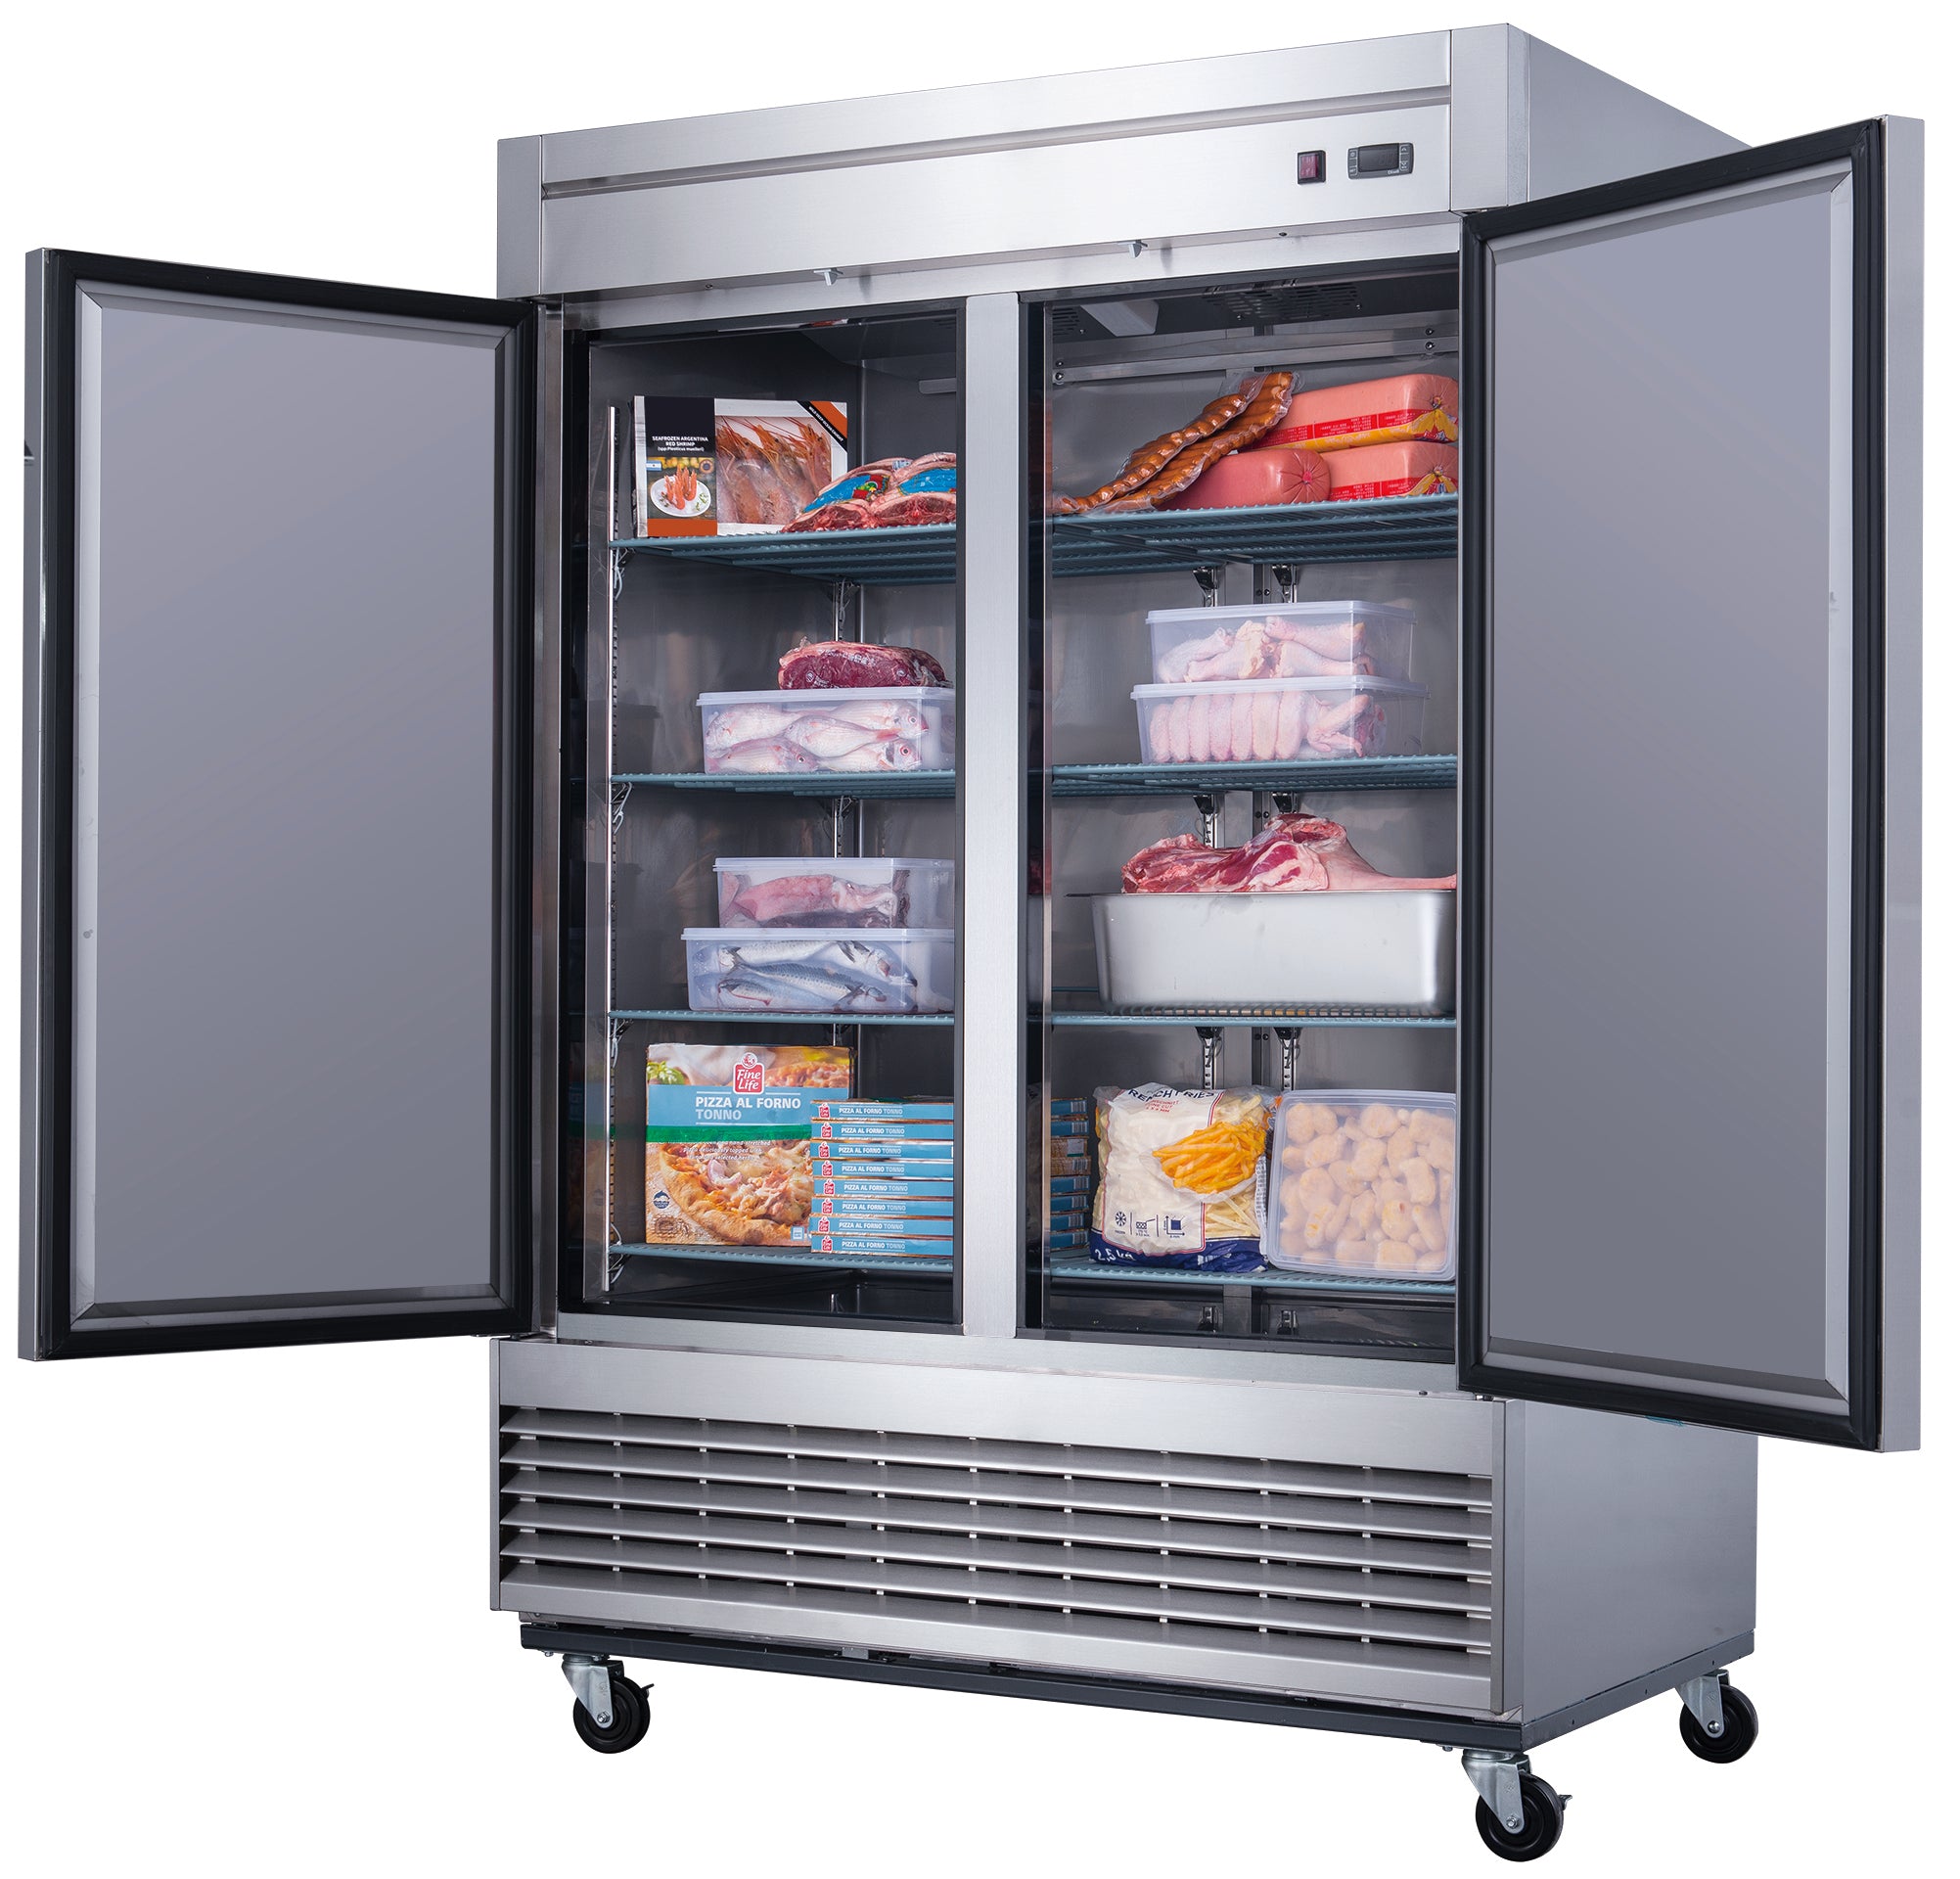 reach-in-freezer-commercial-freezer